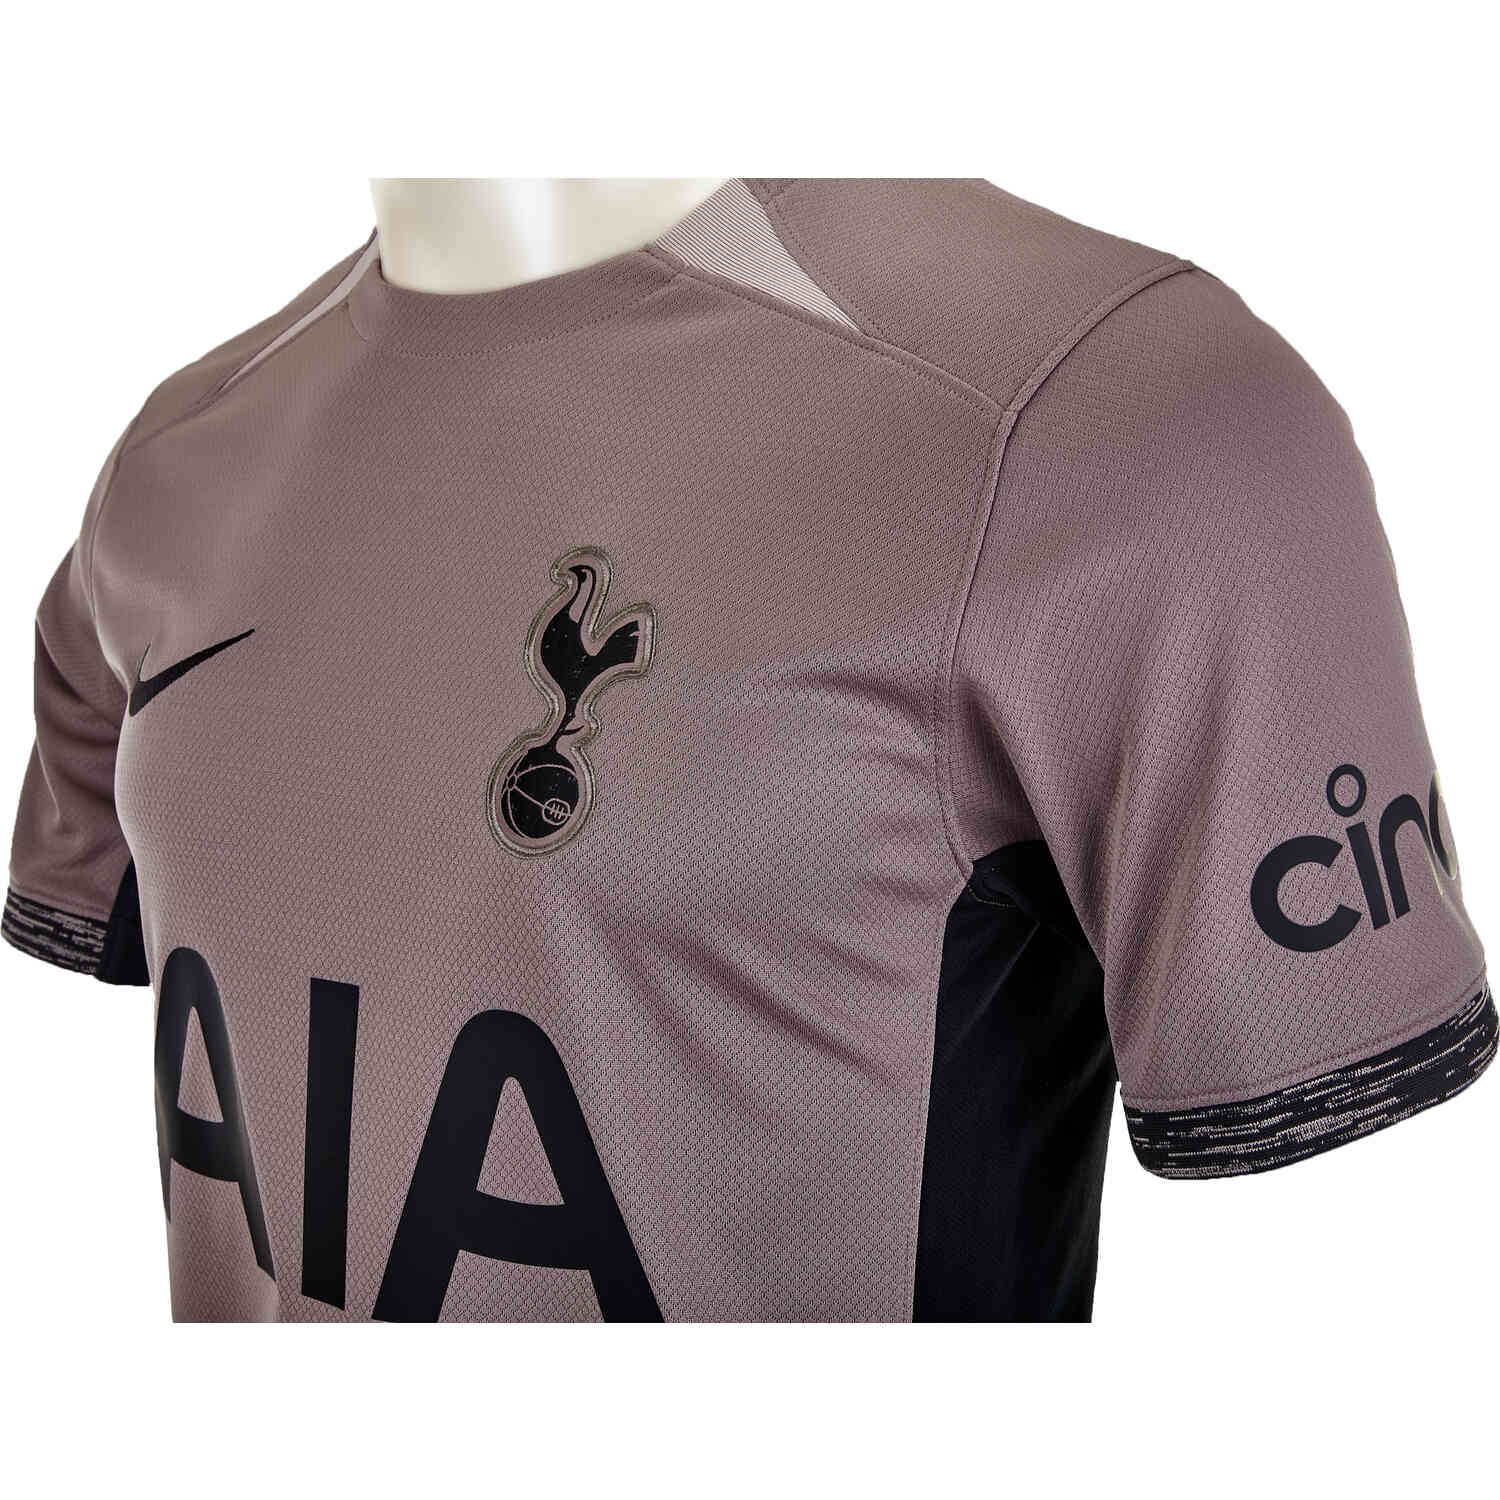 Tottenham Hotspur Third Kit,Tottenham Hotspur Third Shirt,S-XL Player 18/19  Tottenham Hotspur Third jersey Player version